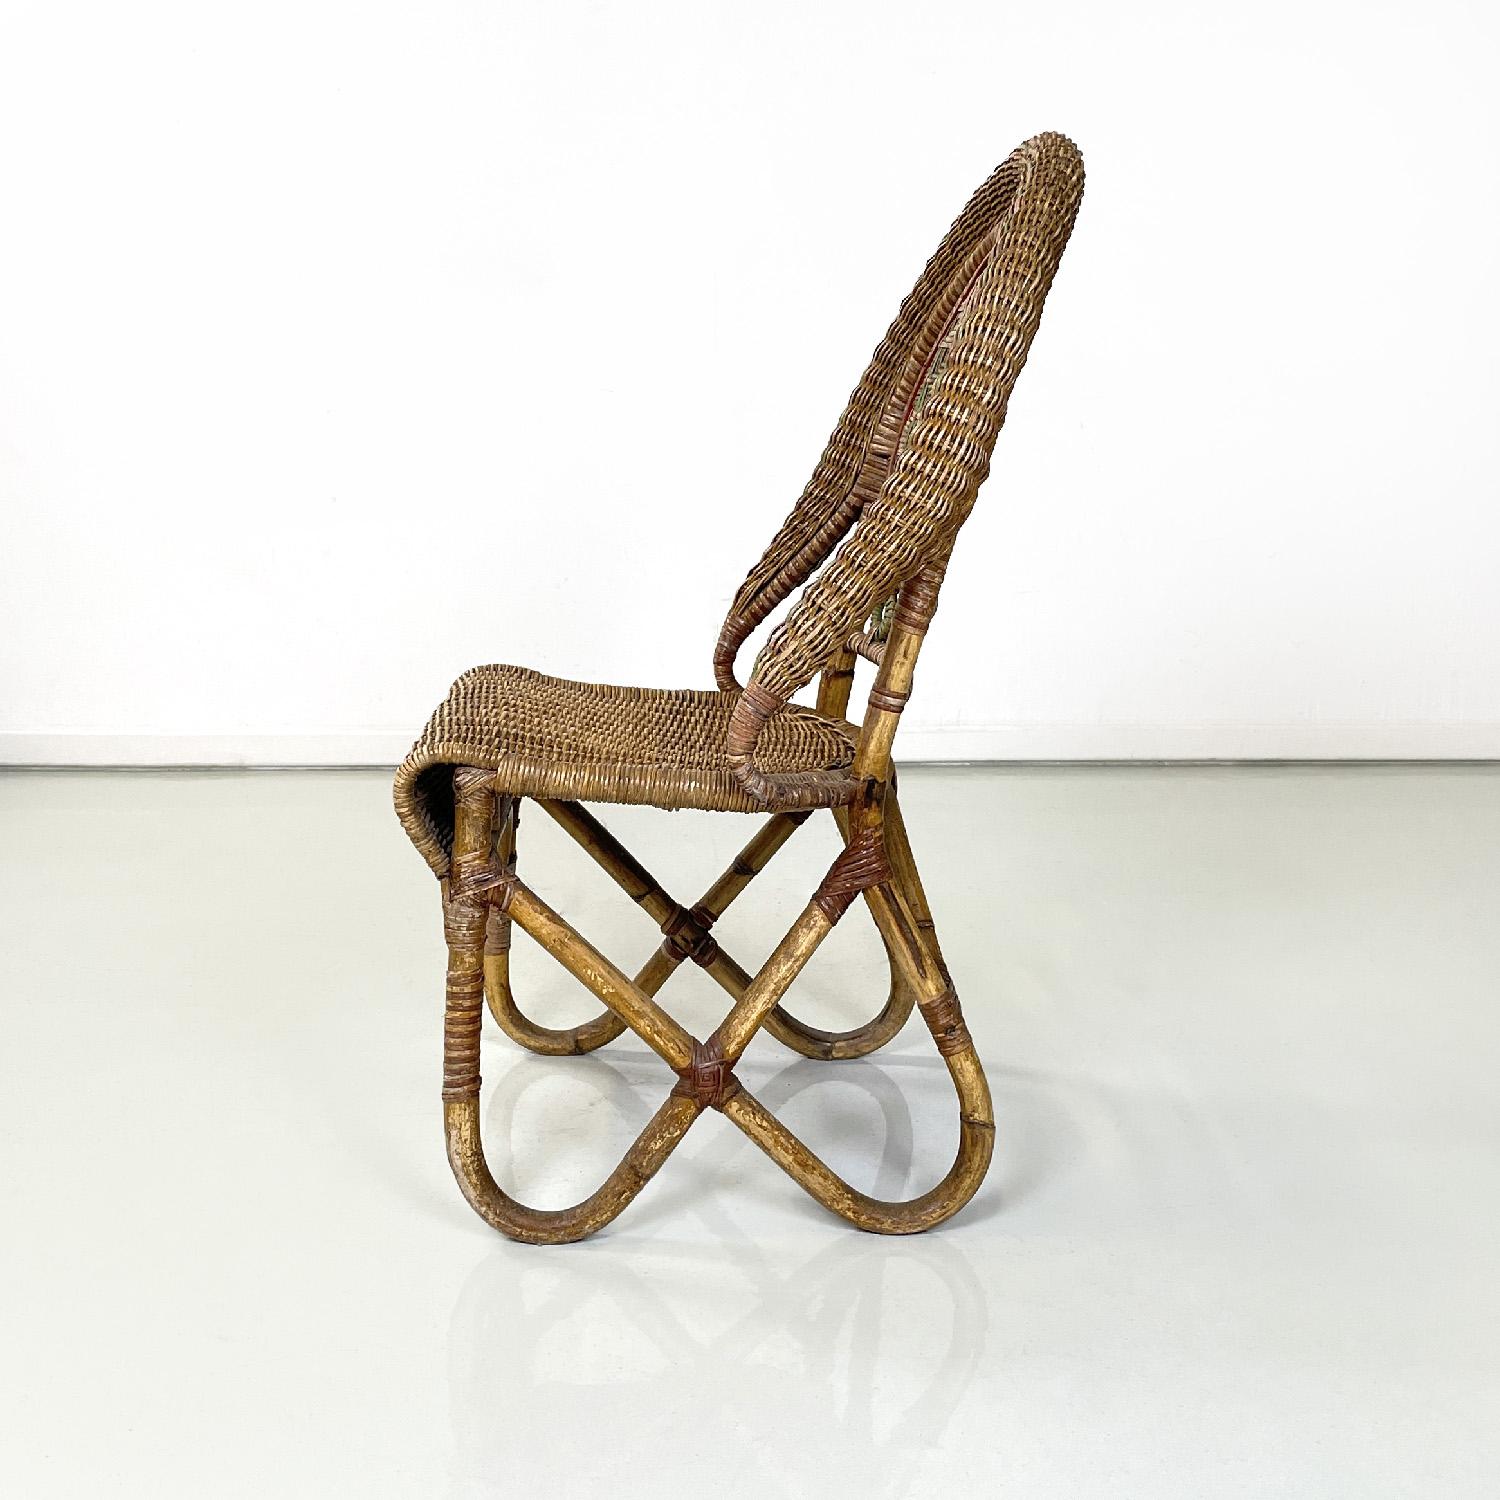 Early 20th Century Italian antique rattan chairs by Mongiardino and Bonacina for Bonacina, 1900s For Sale